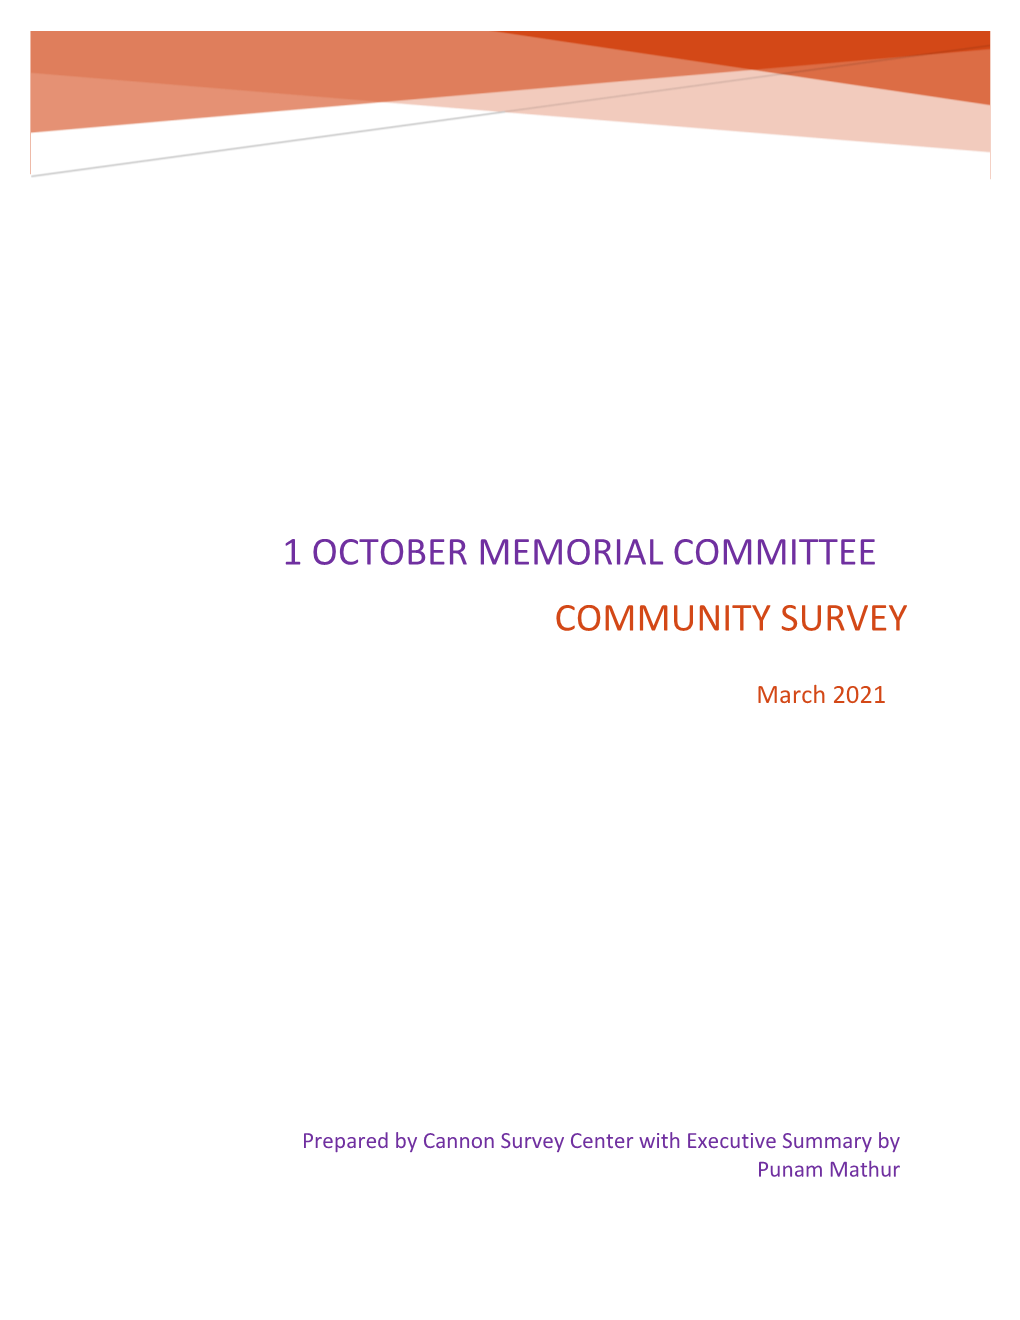 1 October Memorial Committee Community Survey